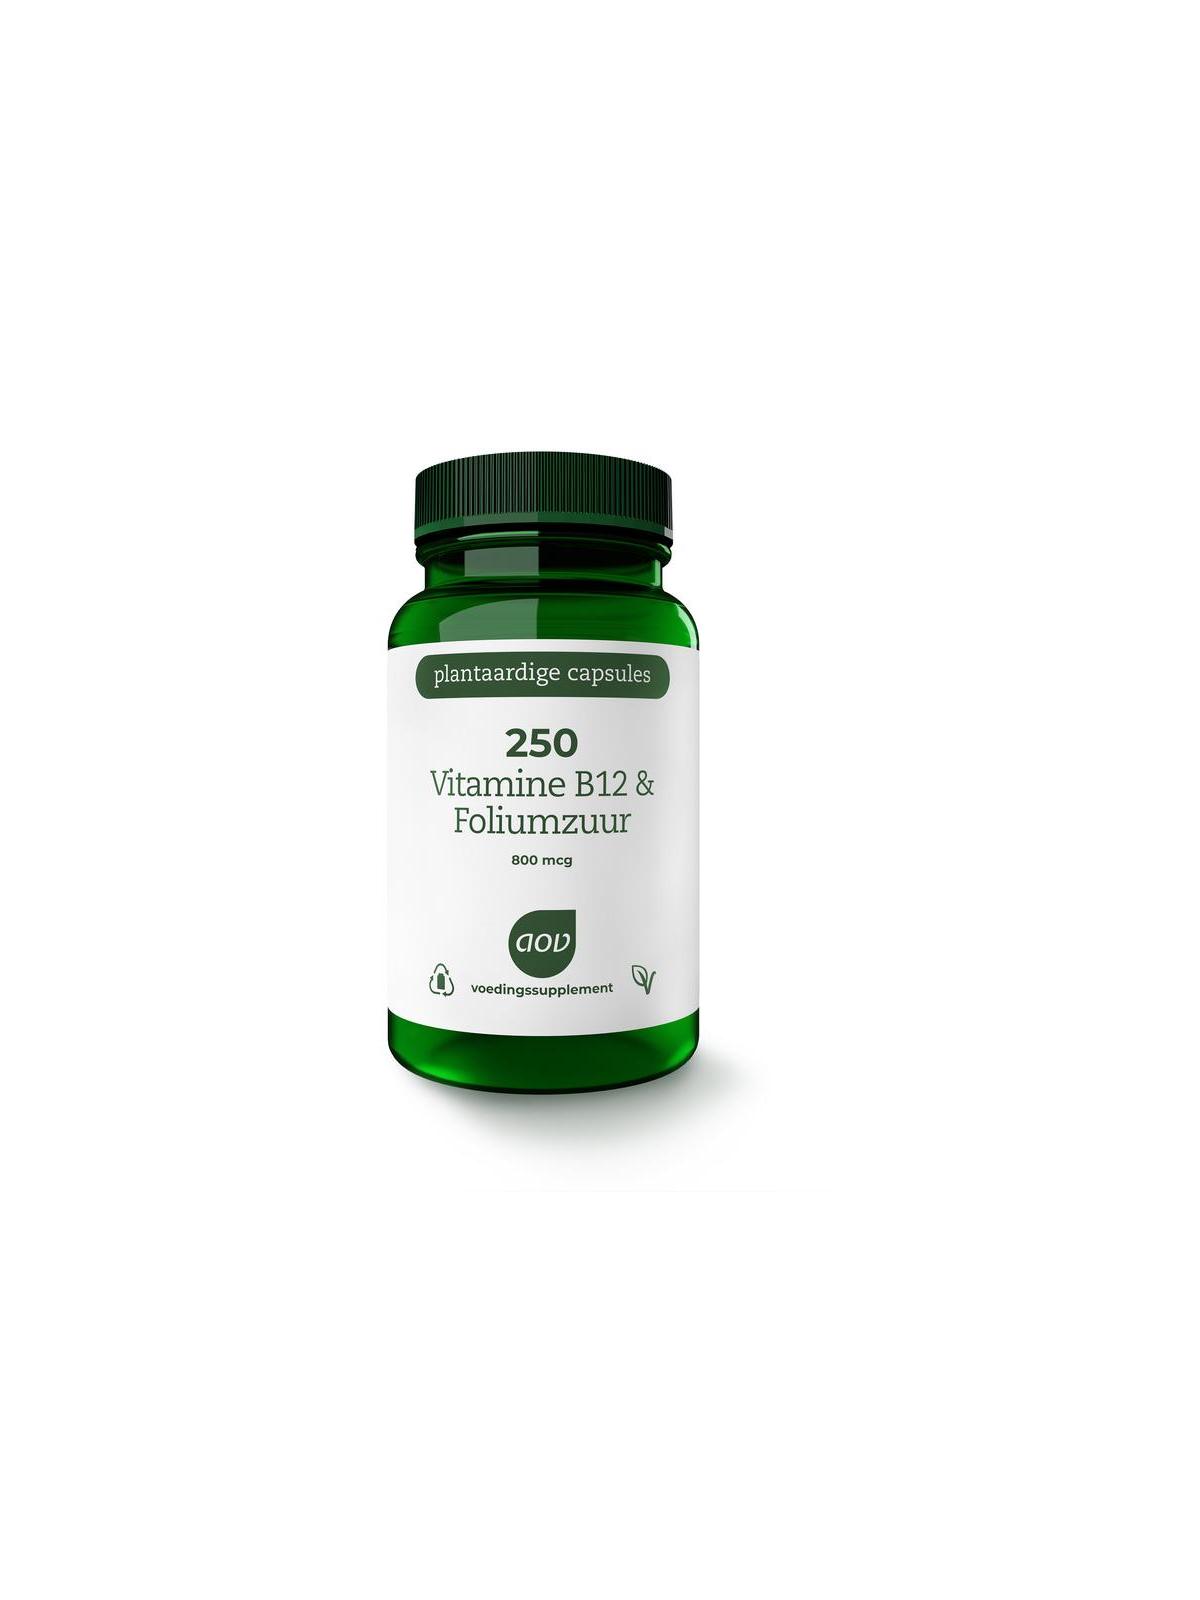 250 Vitamine B12 & foliumzuur